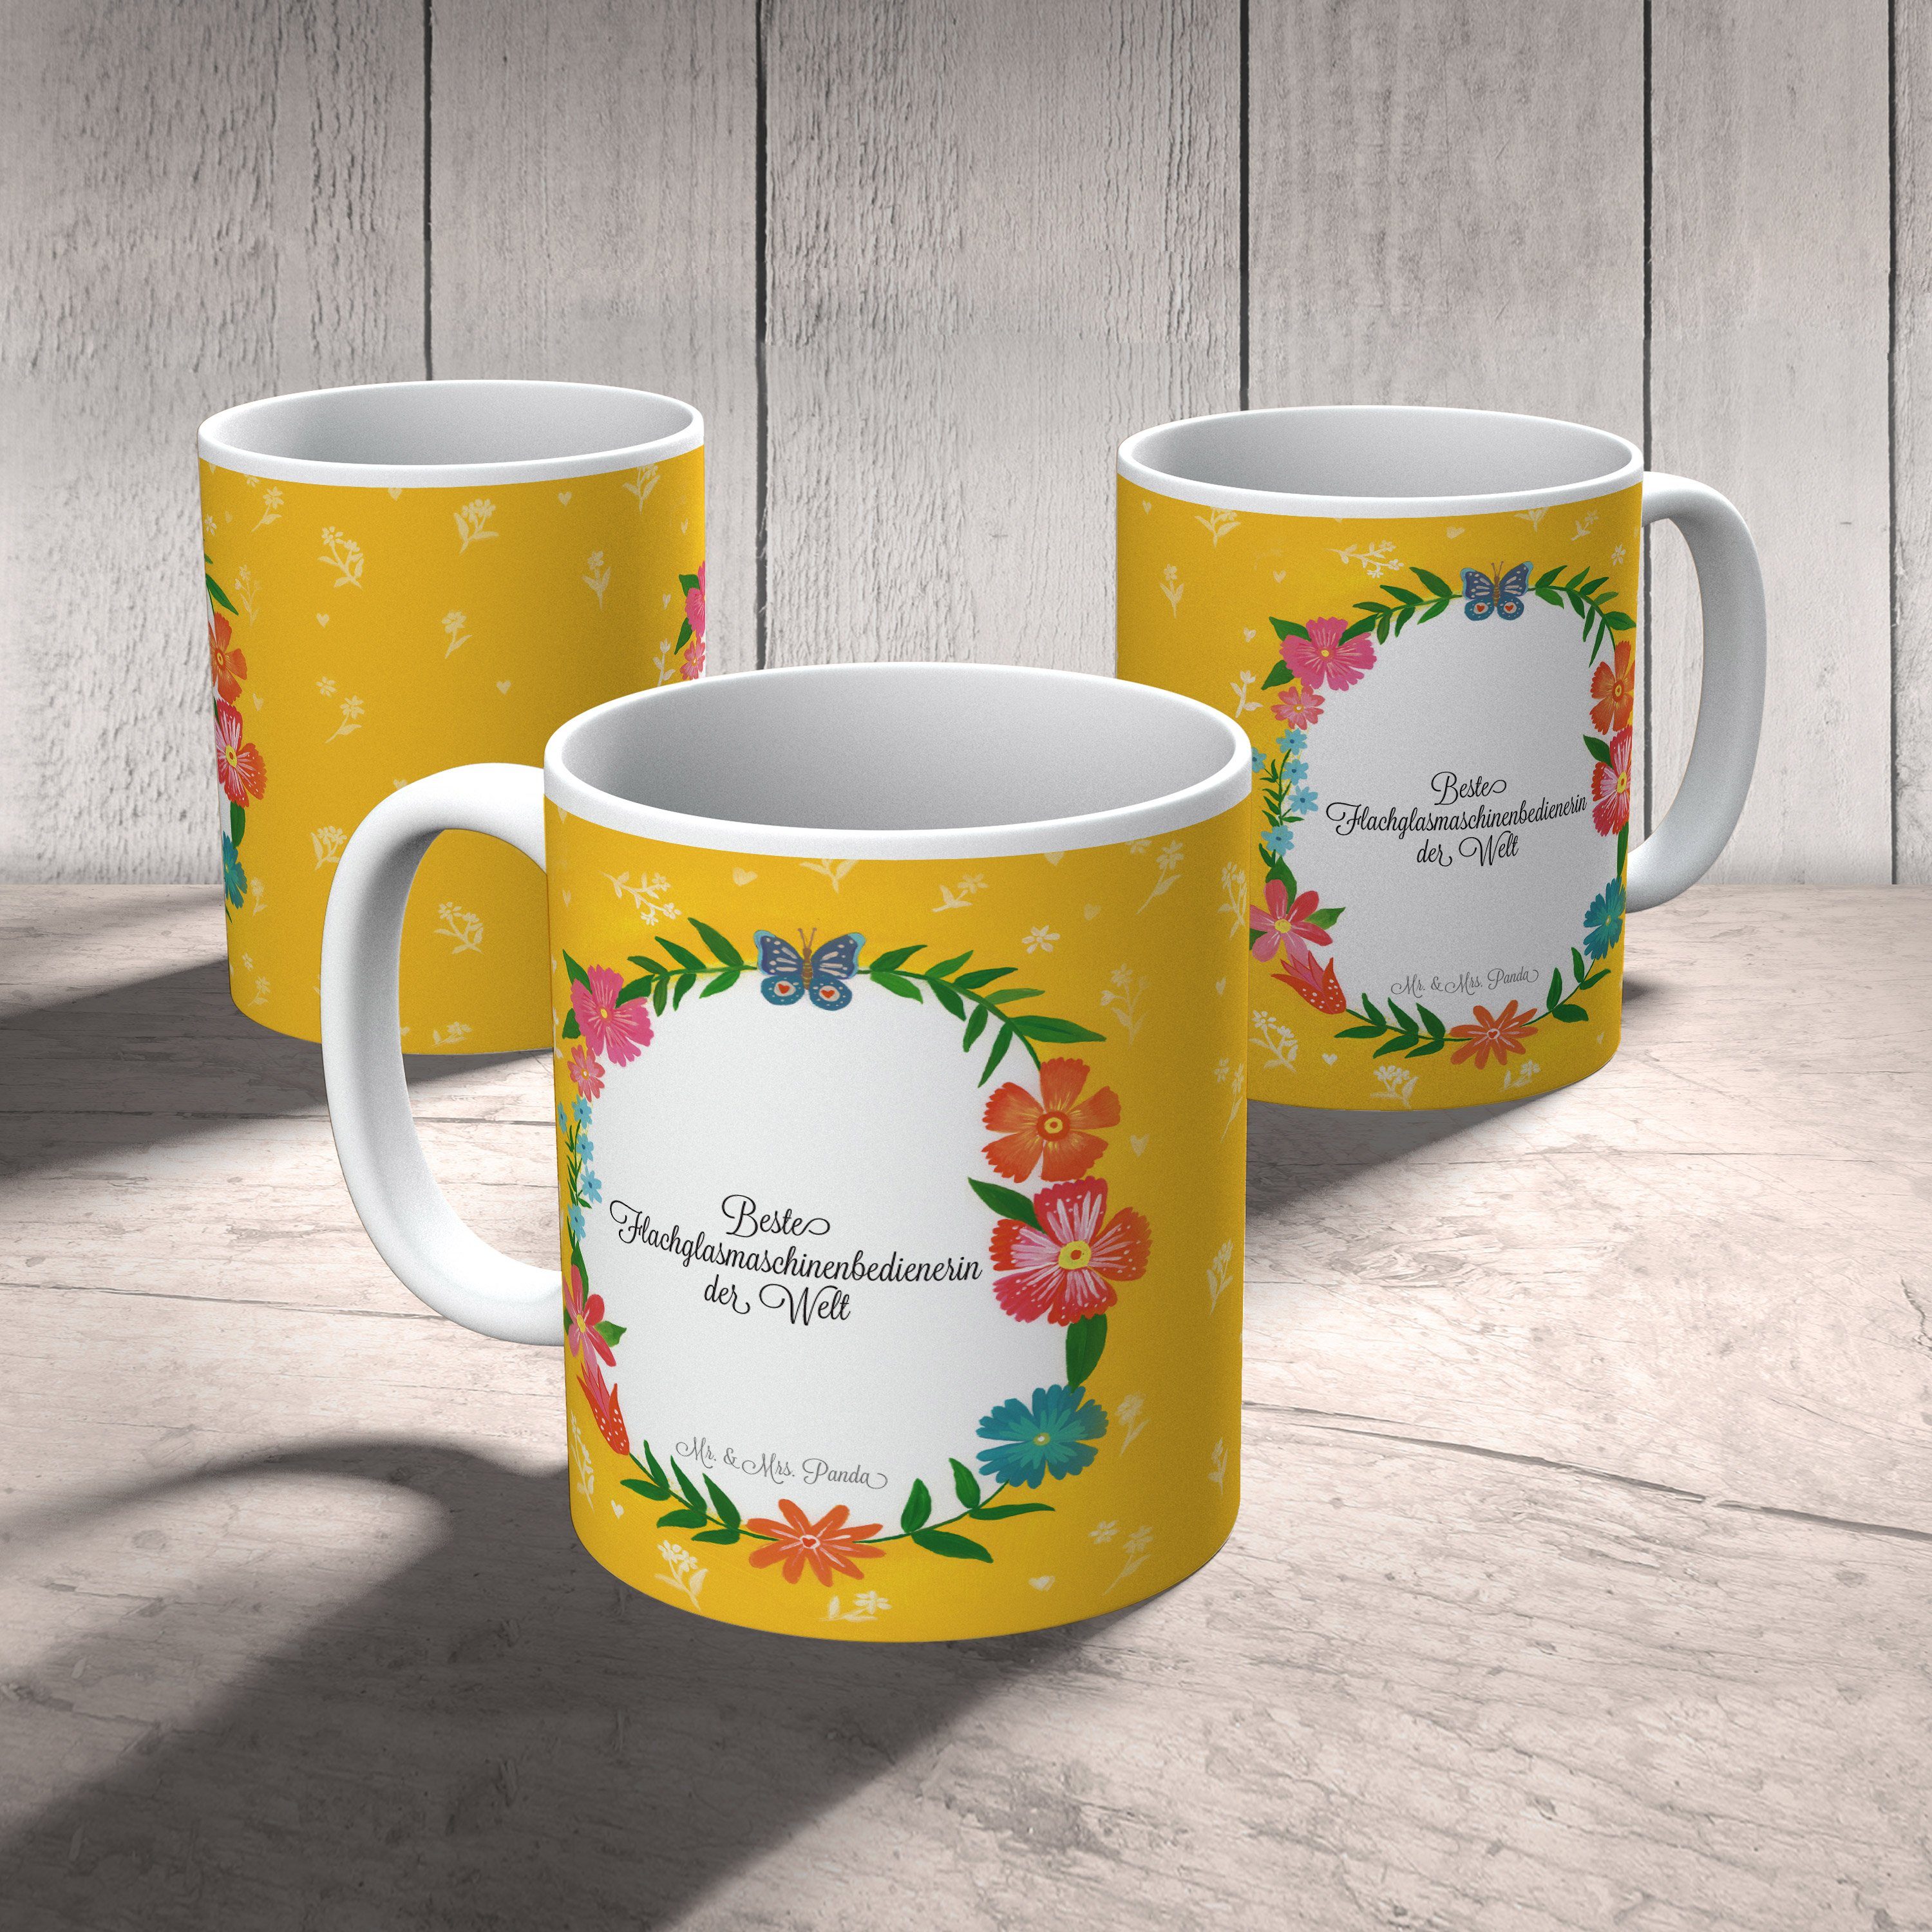 Mr. & Mrs. Geschenk, Tasse Tasse Keramik - Flachglasmaschinenbedienerin Panda Kaffeeb, Motive, Tasse